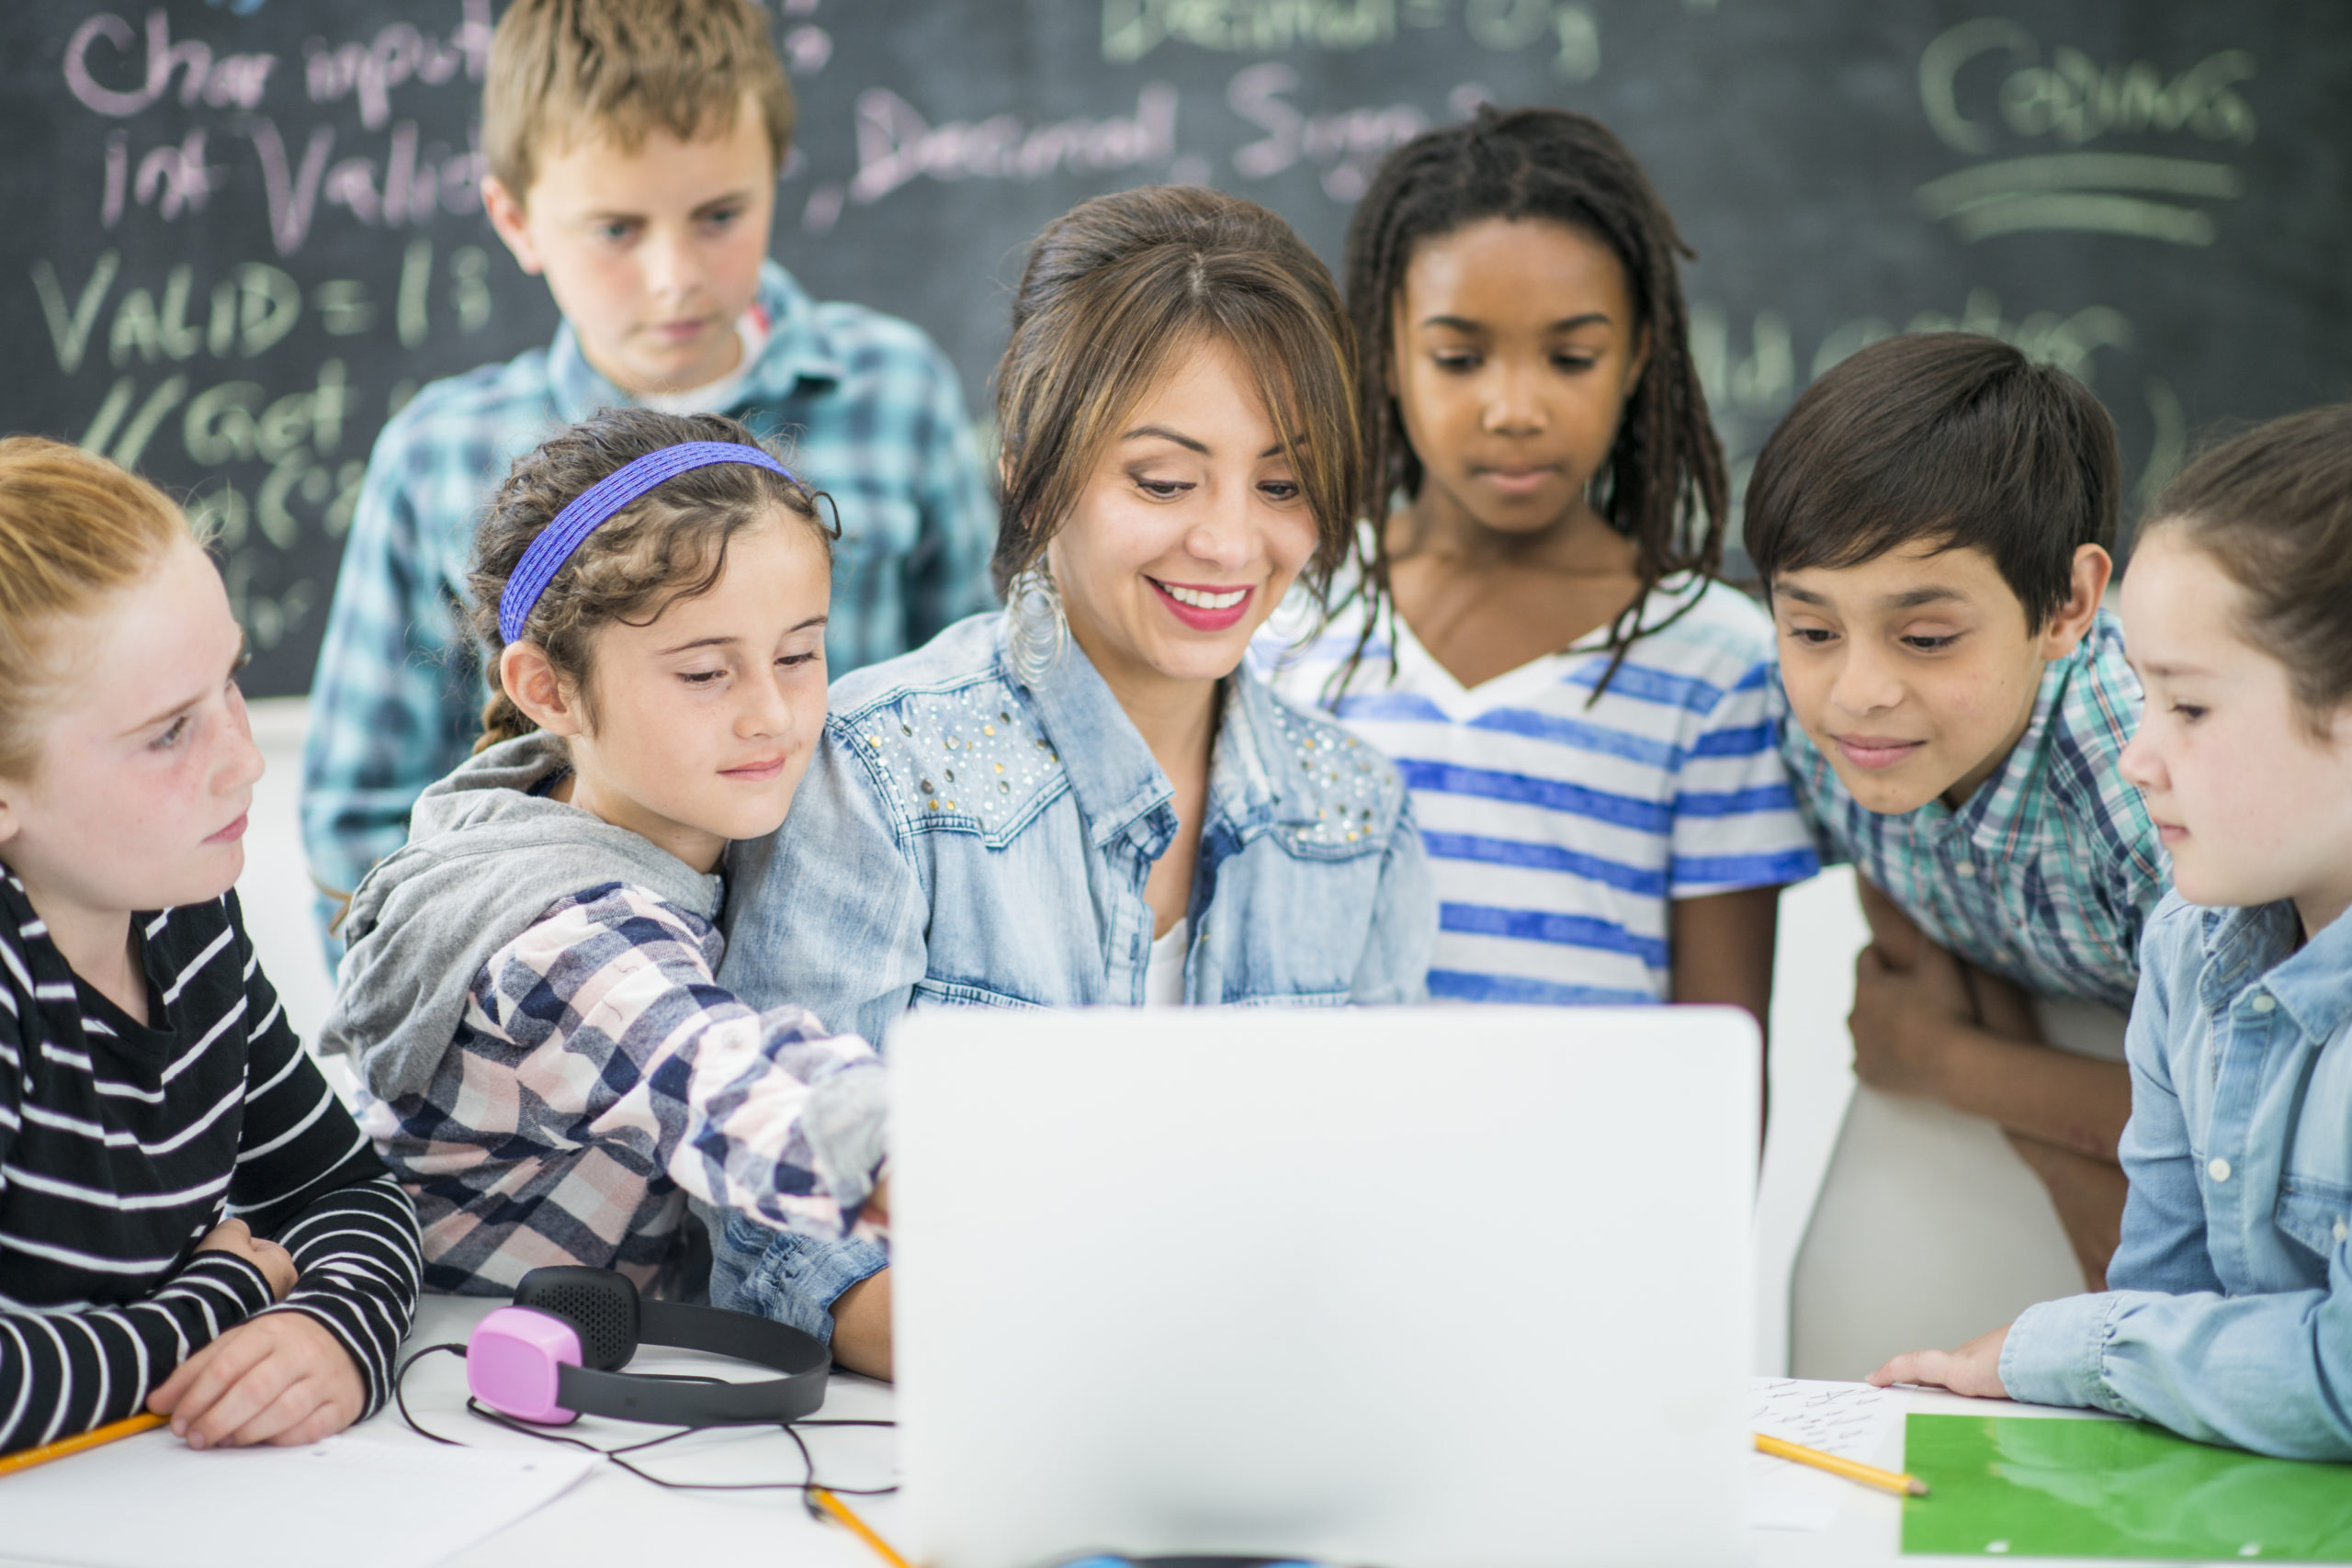 13 Best Online Education Programs For Kids In 2020 Codakid - roblox educational partnership engineering classes for kids